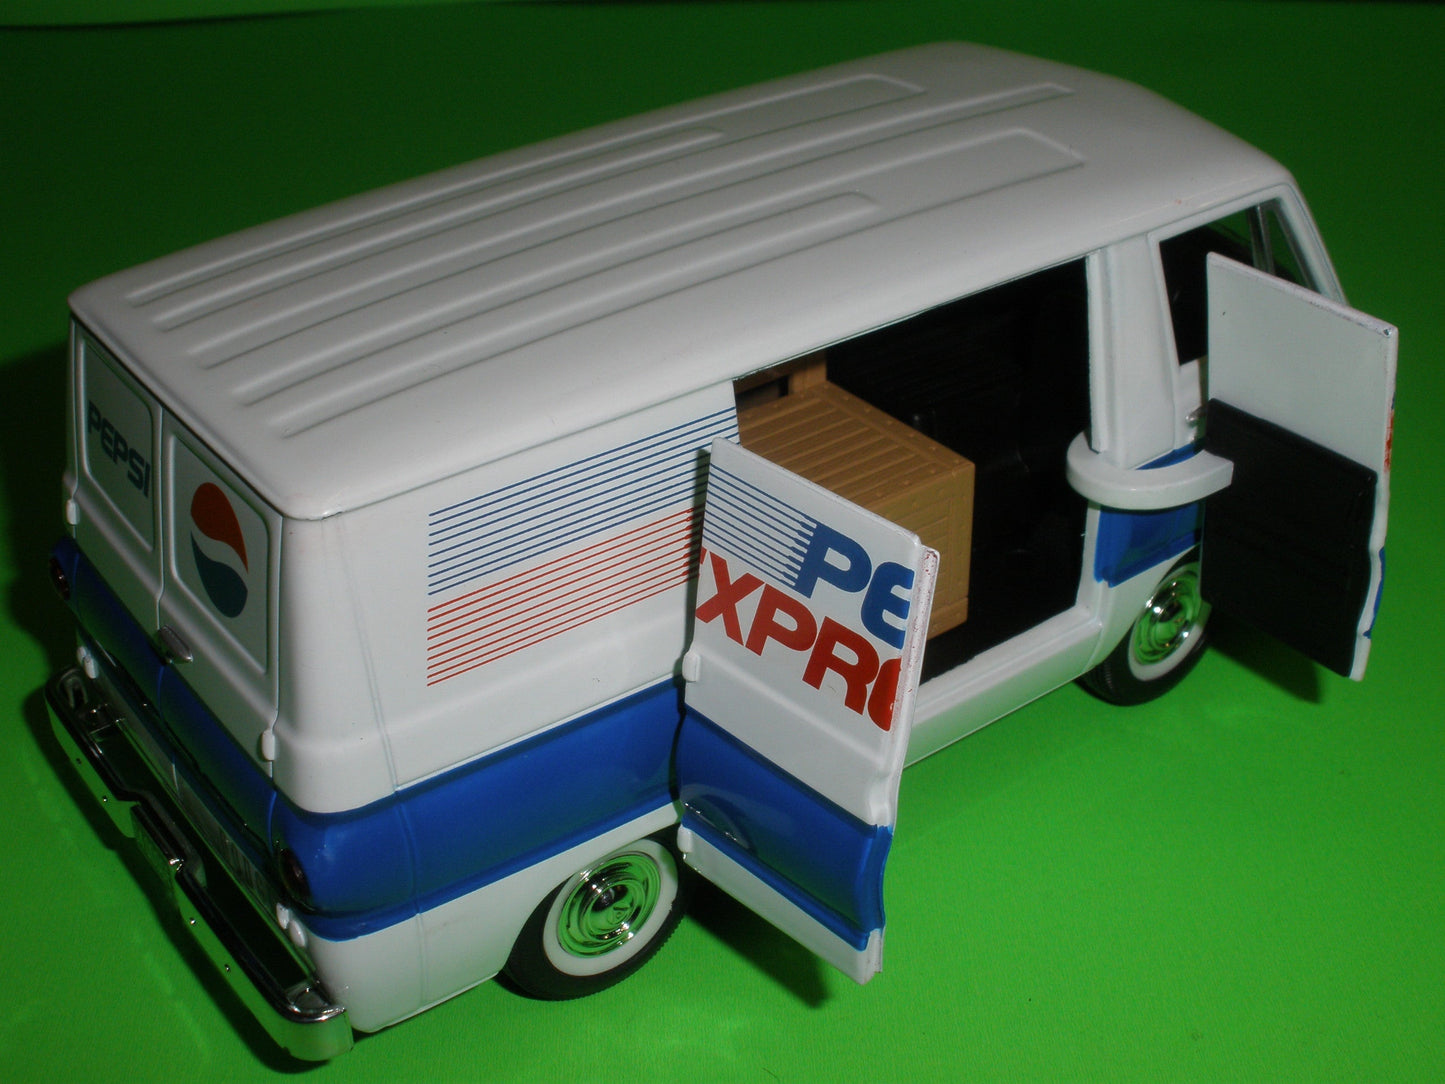 Pepsi Cola Express 1964 Dodge A100 Panel Van